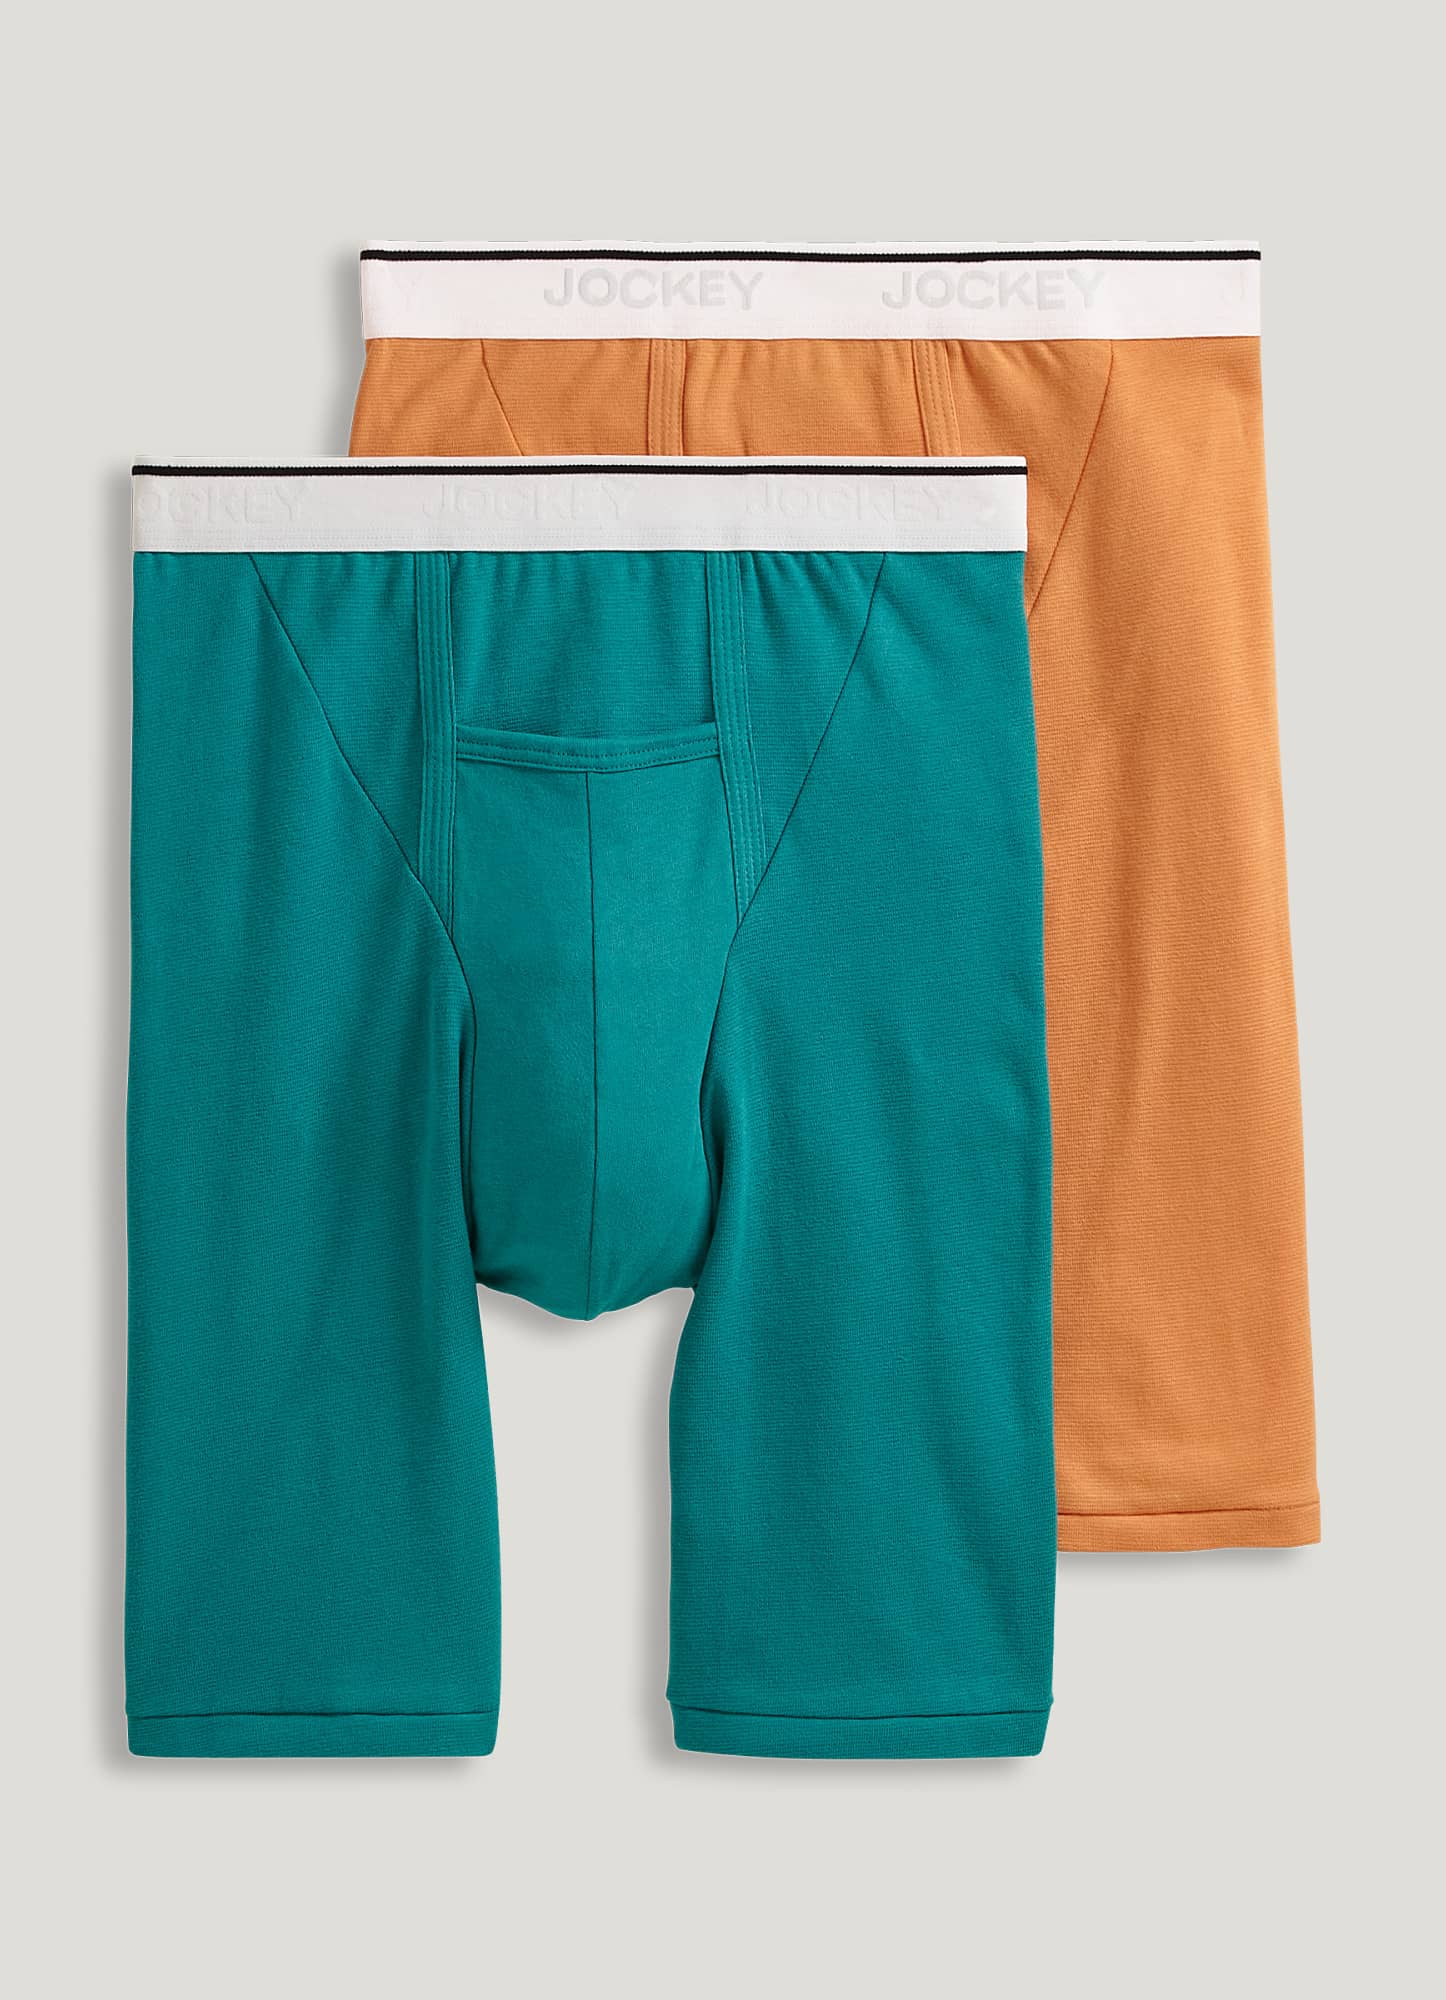 Jockey Men's Underwear Big Man Pouch Brief - 2 Pack, Beach Bonfire/Bayou,  3XL at  Men's Clothing store